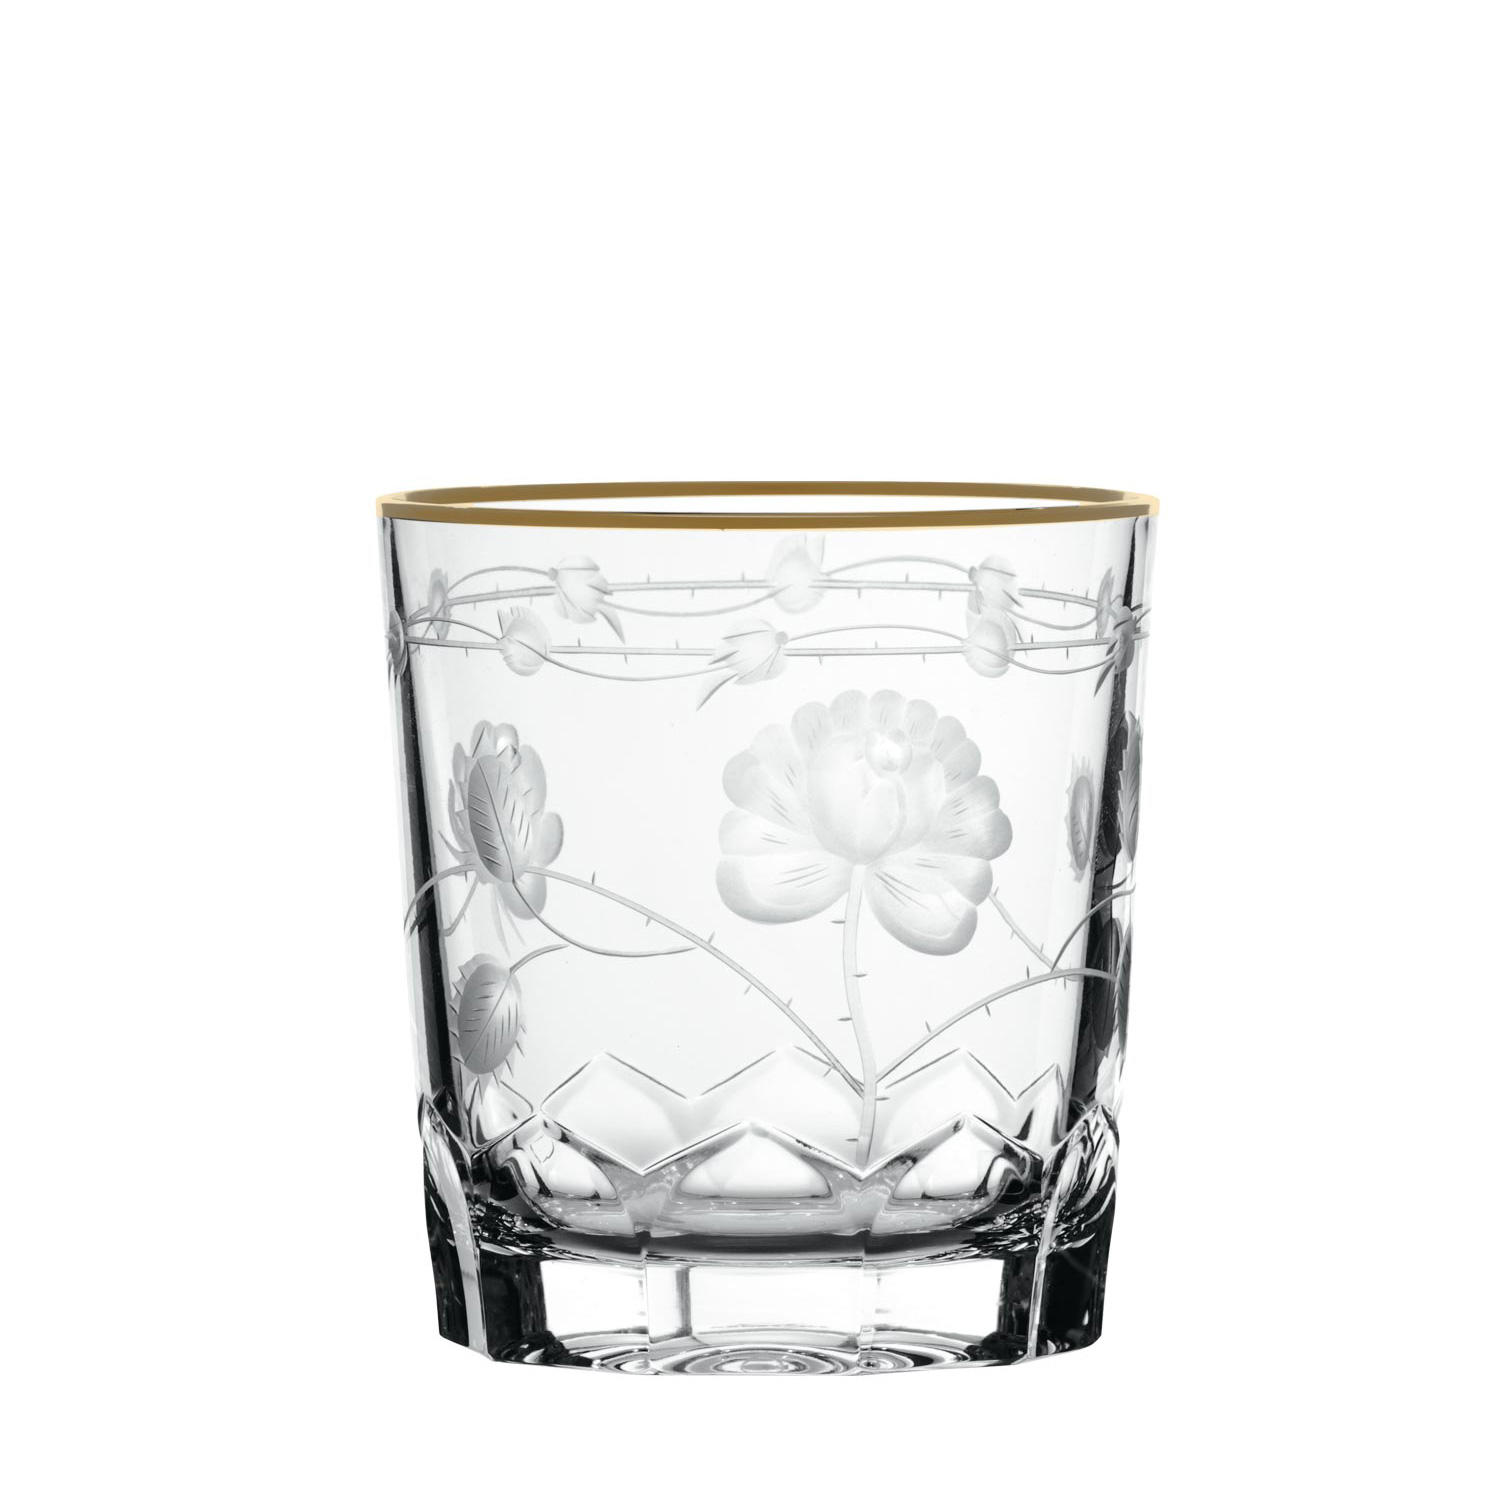 Whiskyglas Kristall Monrose Gold clear (9,3 cm)